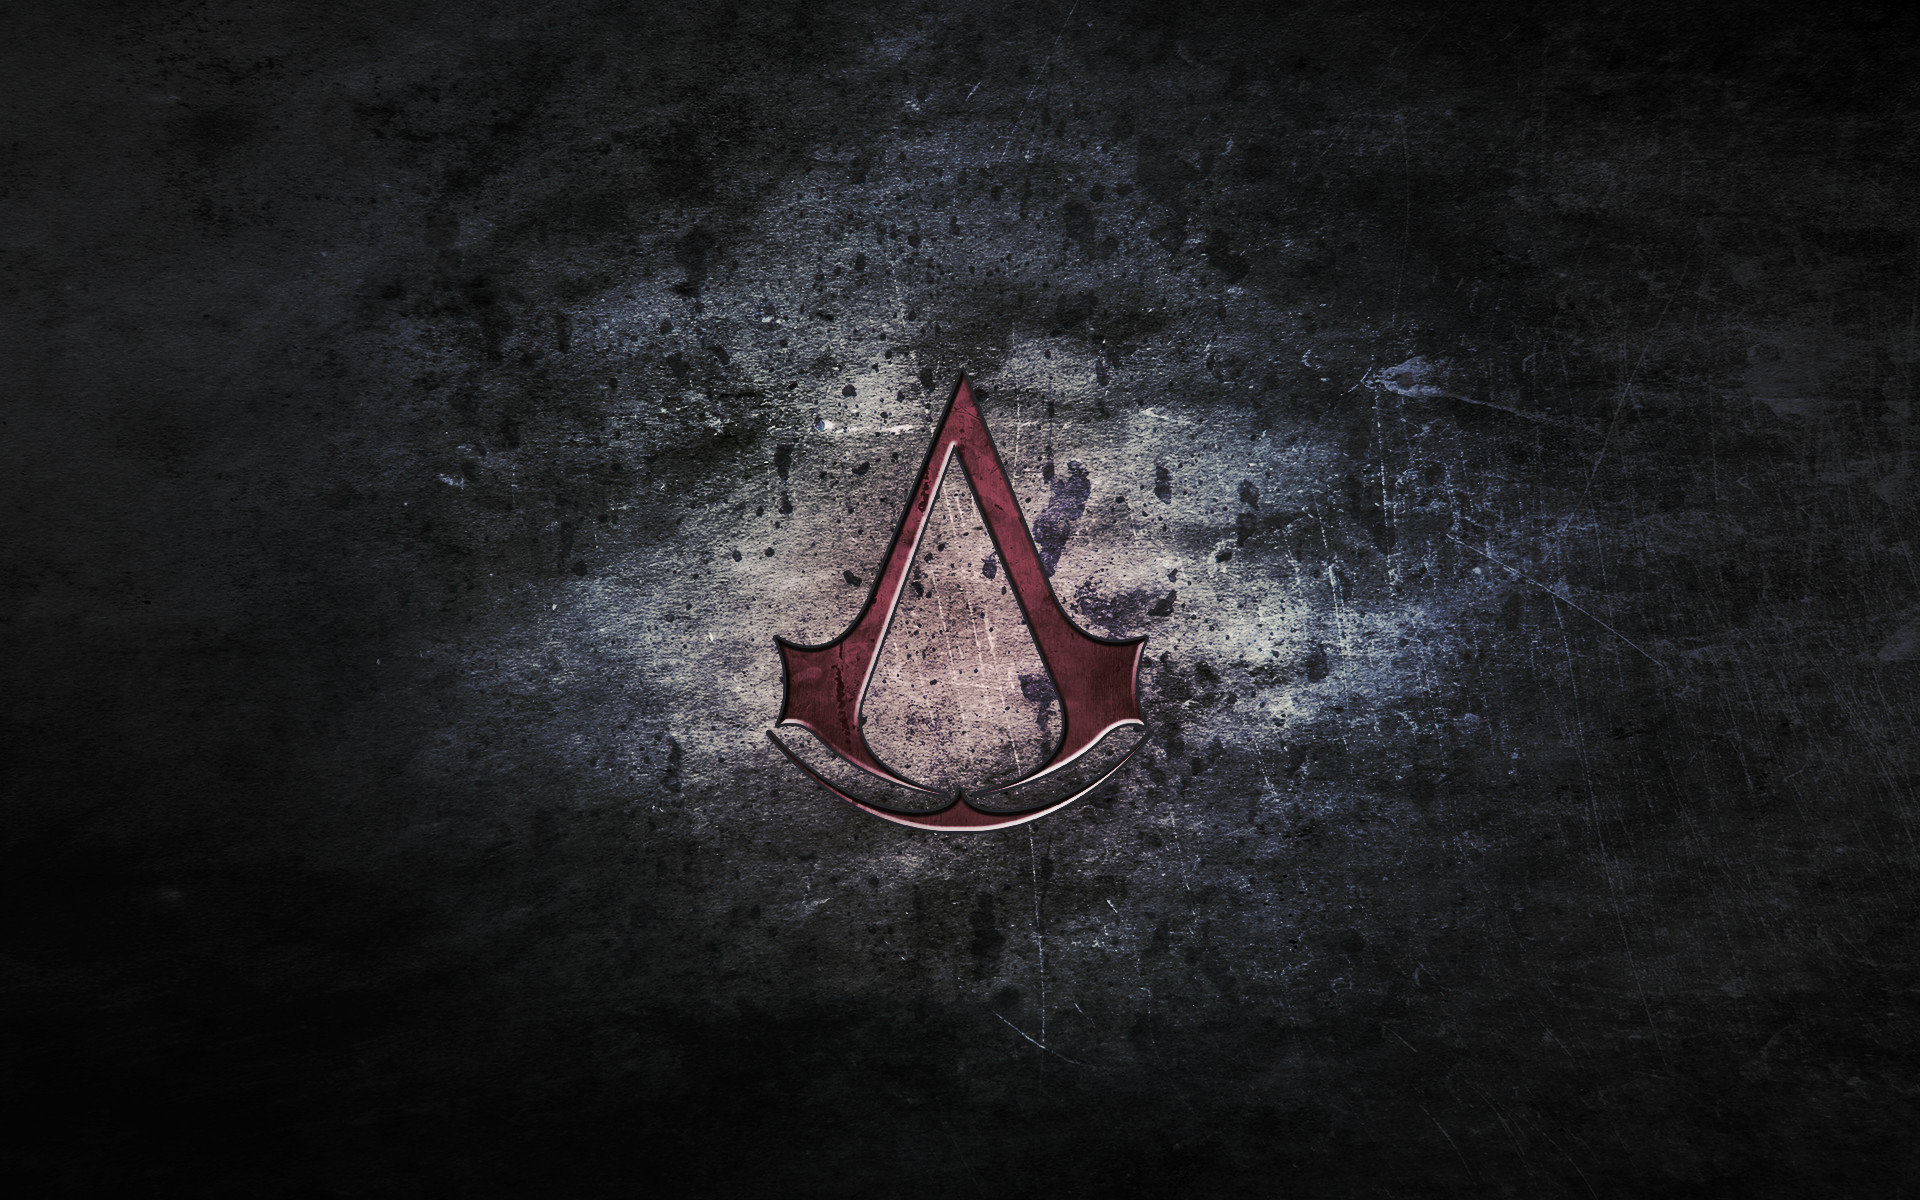 Best Ezio (Assassin's Creed) wallpaper ID:188199 for High Resolution hd 1920x1200 desktop